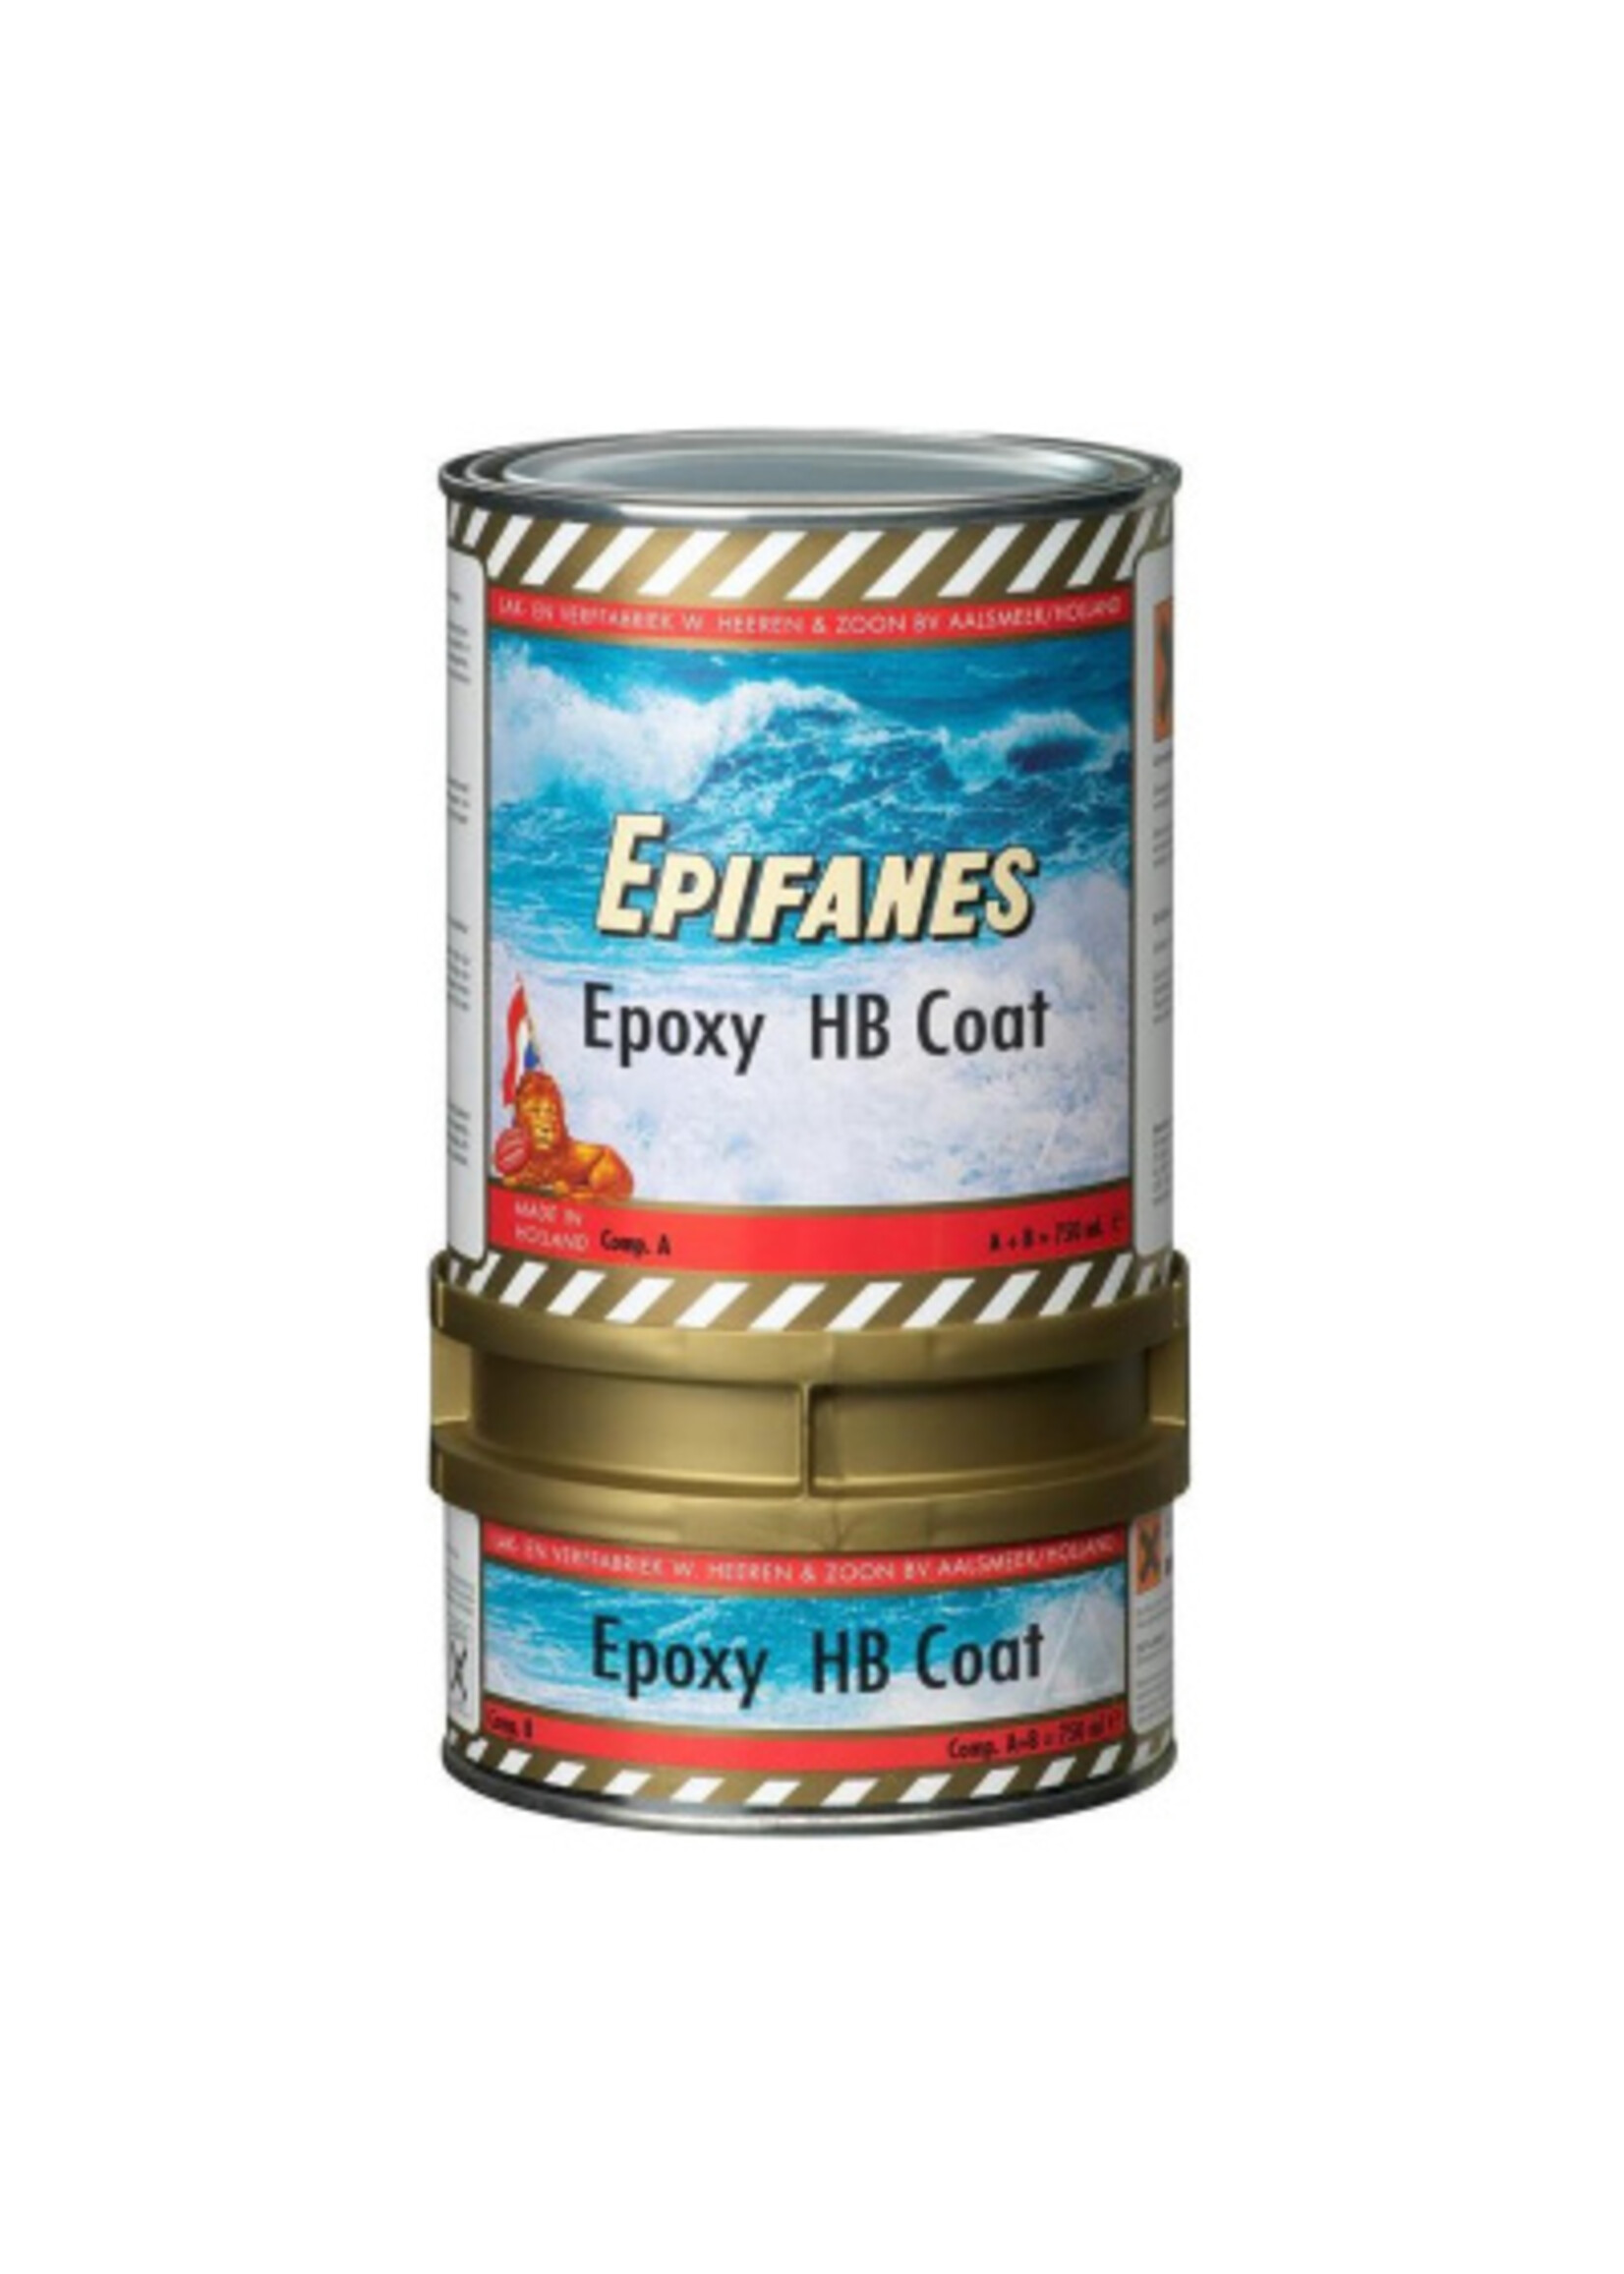 Epifanes Epoxy HB Coat Grijs - Set